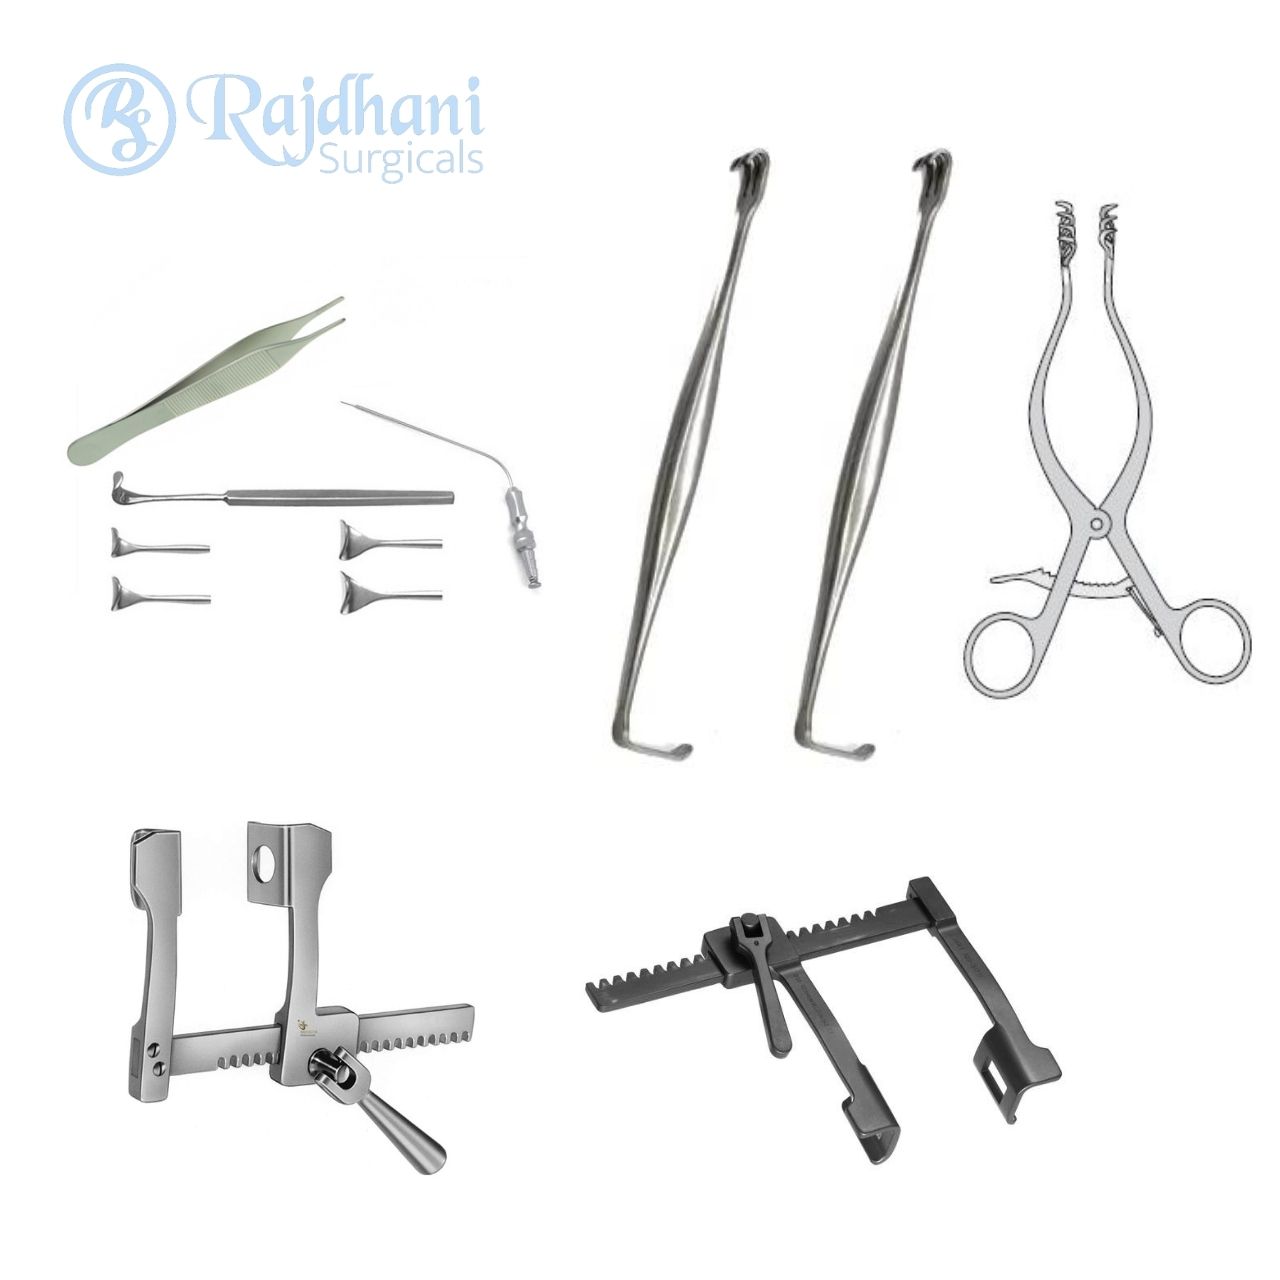 Pediatric Surgery Instruments Manufacturer in Delhi